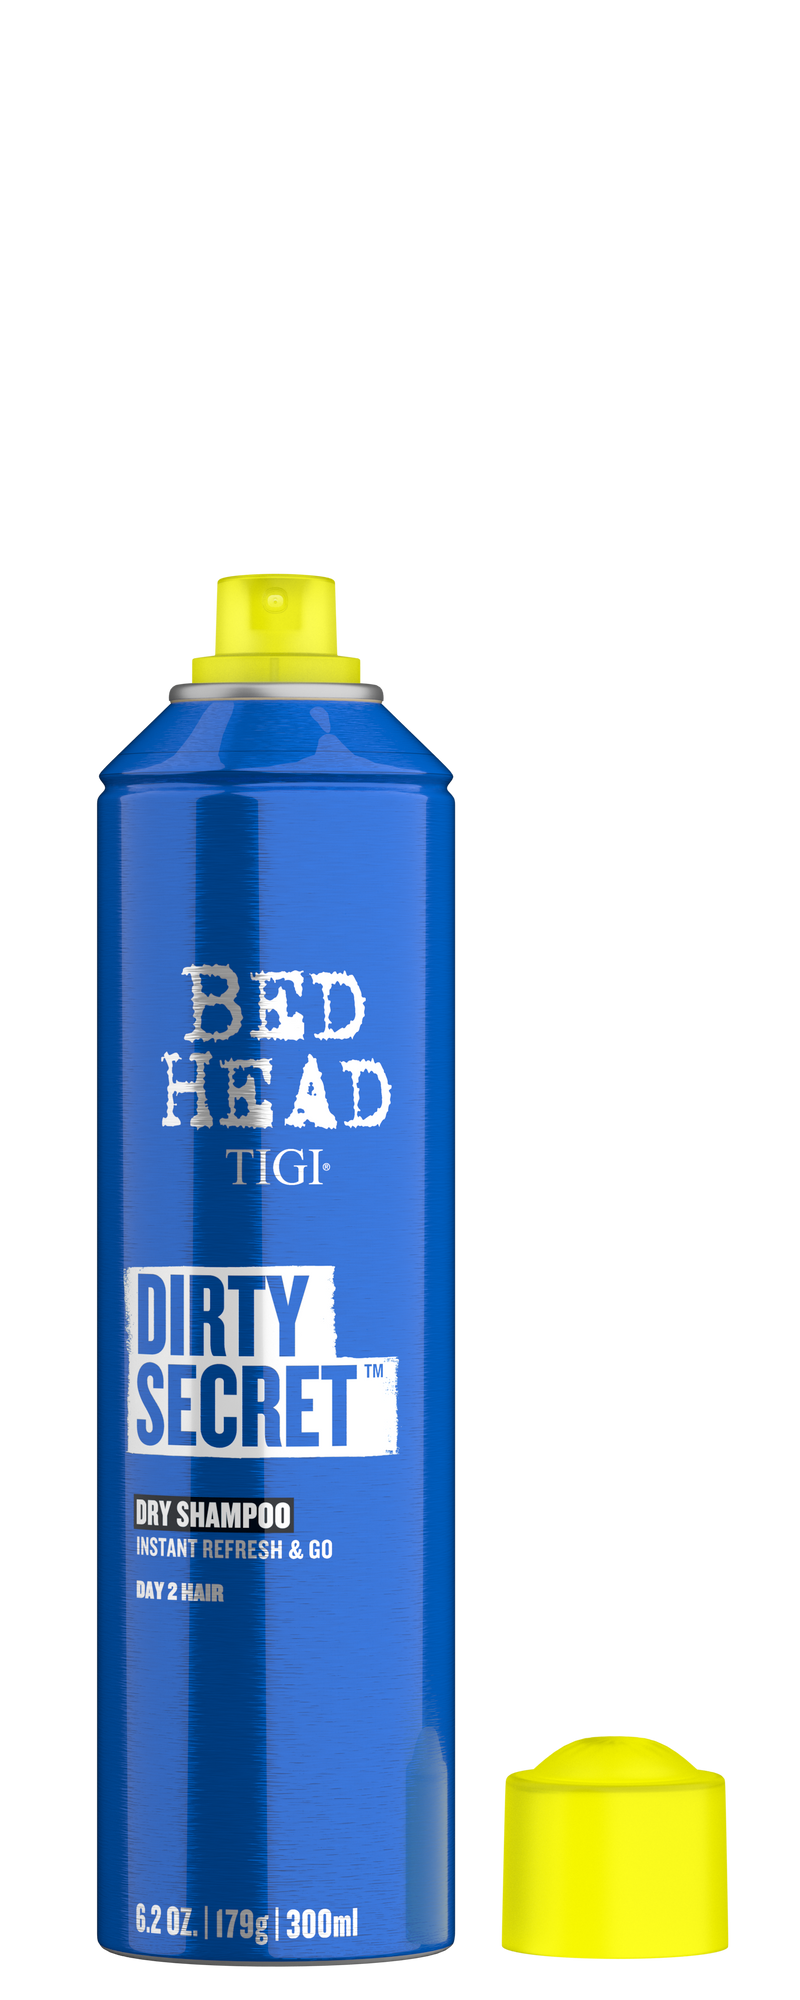 Shampoo Dirty Secret Tigi 300ml